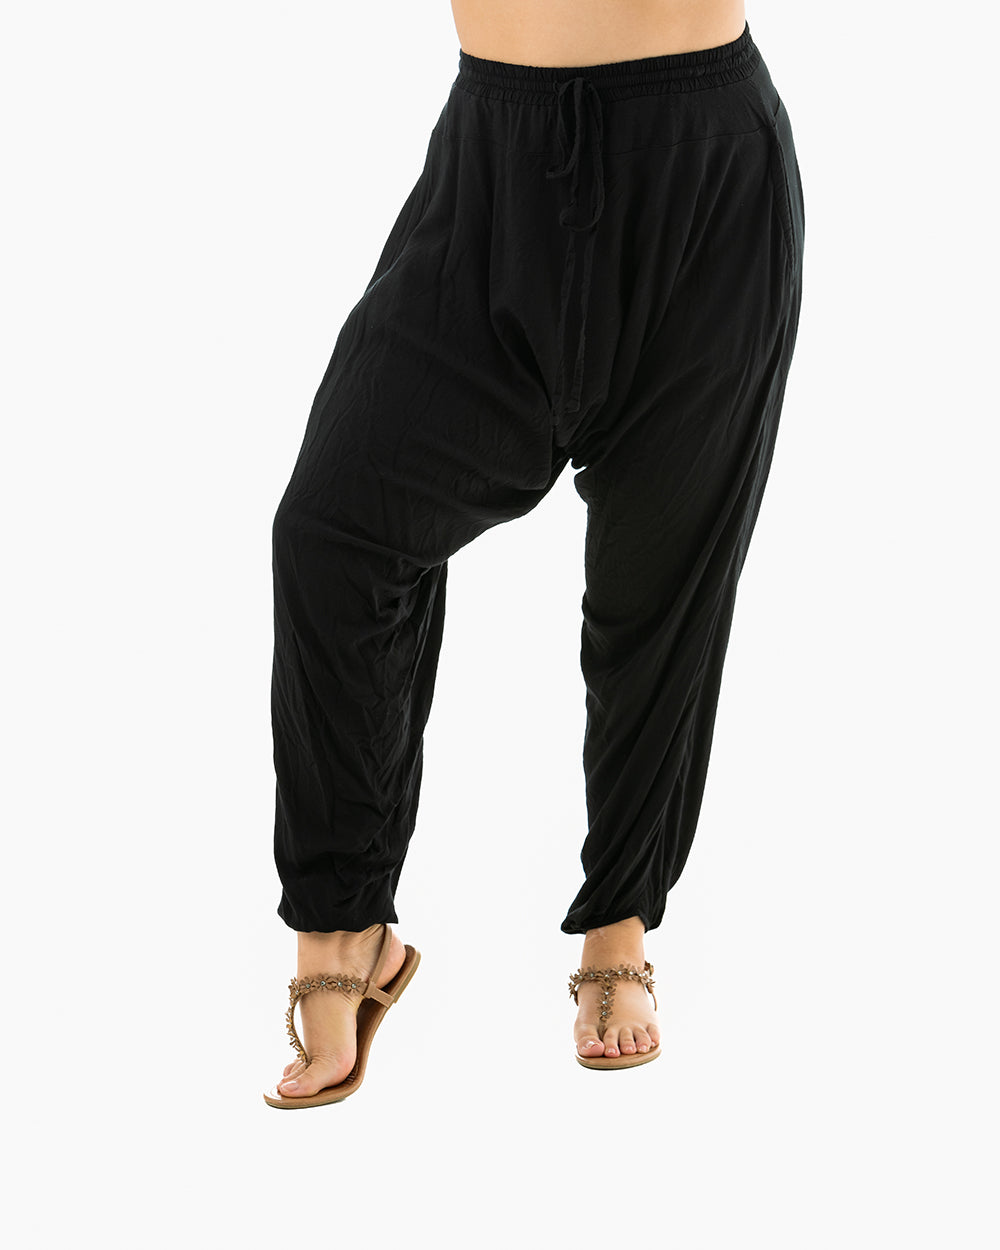 HANWOMEN Womens Boho Harem Pants Leggings Casual Baggy Loose Yoga Trousers  Yellow S - Walmart.com